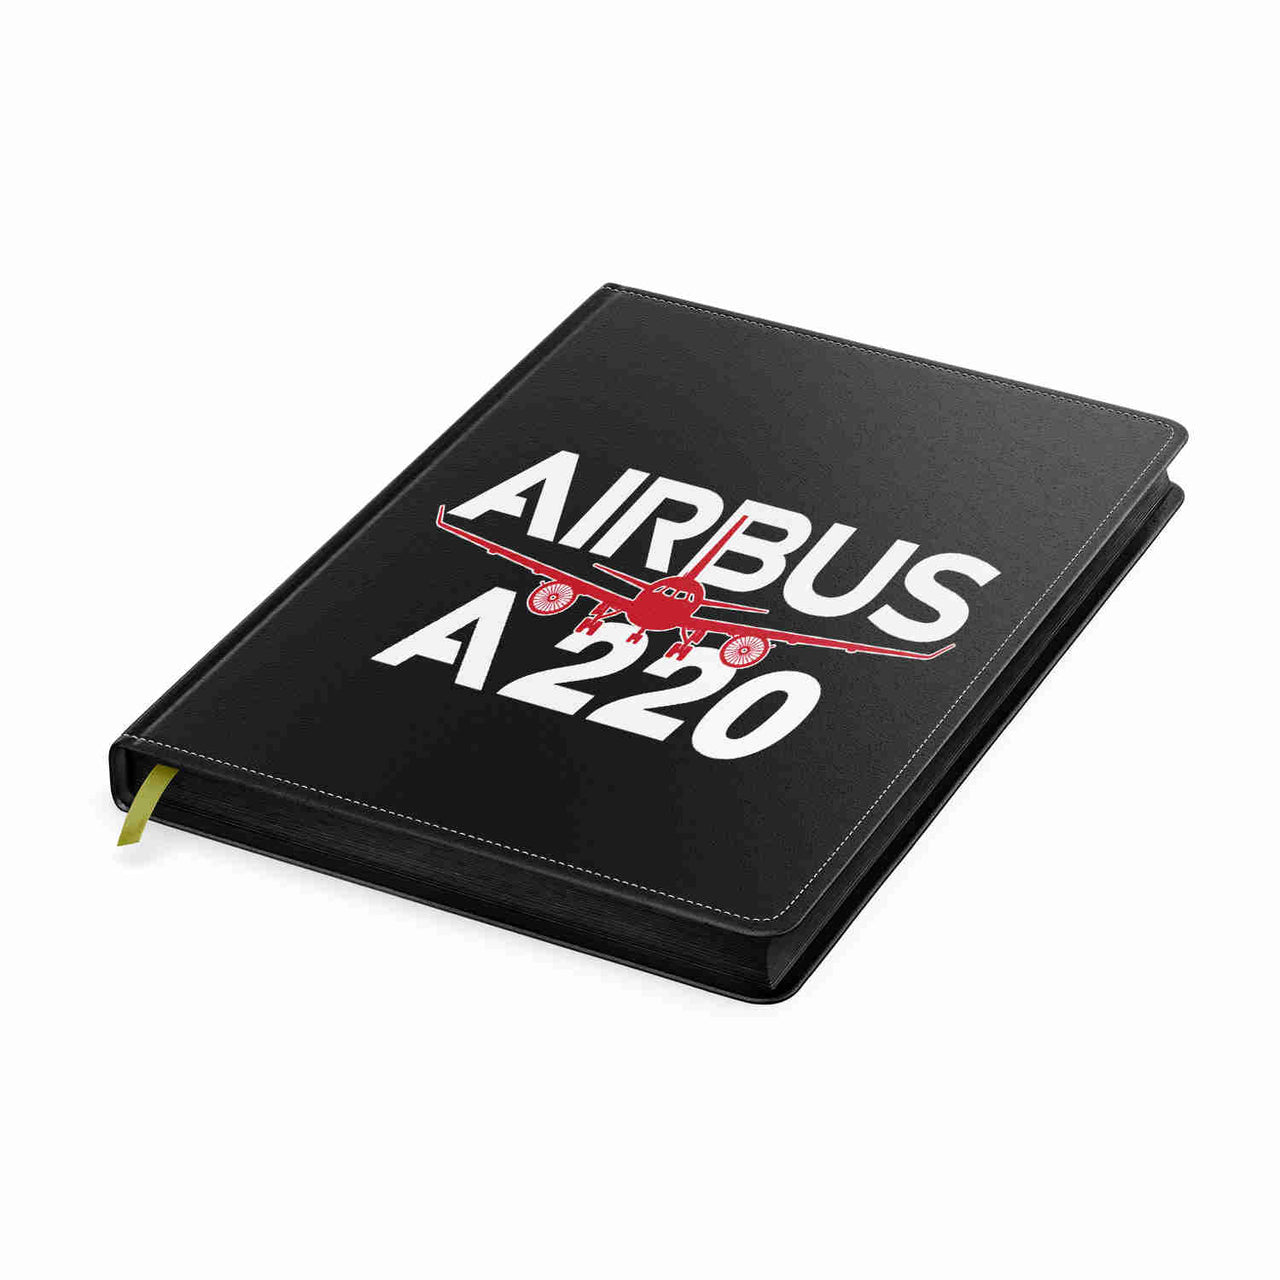 Amazing Airbus A220 Designed Notebooks